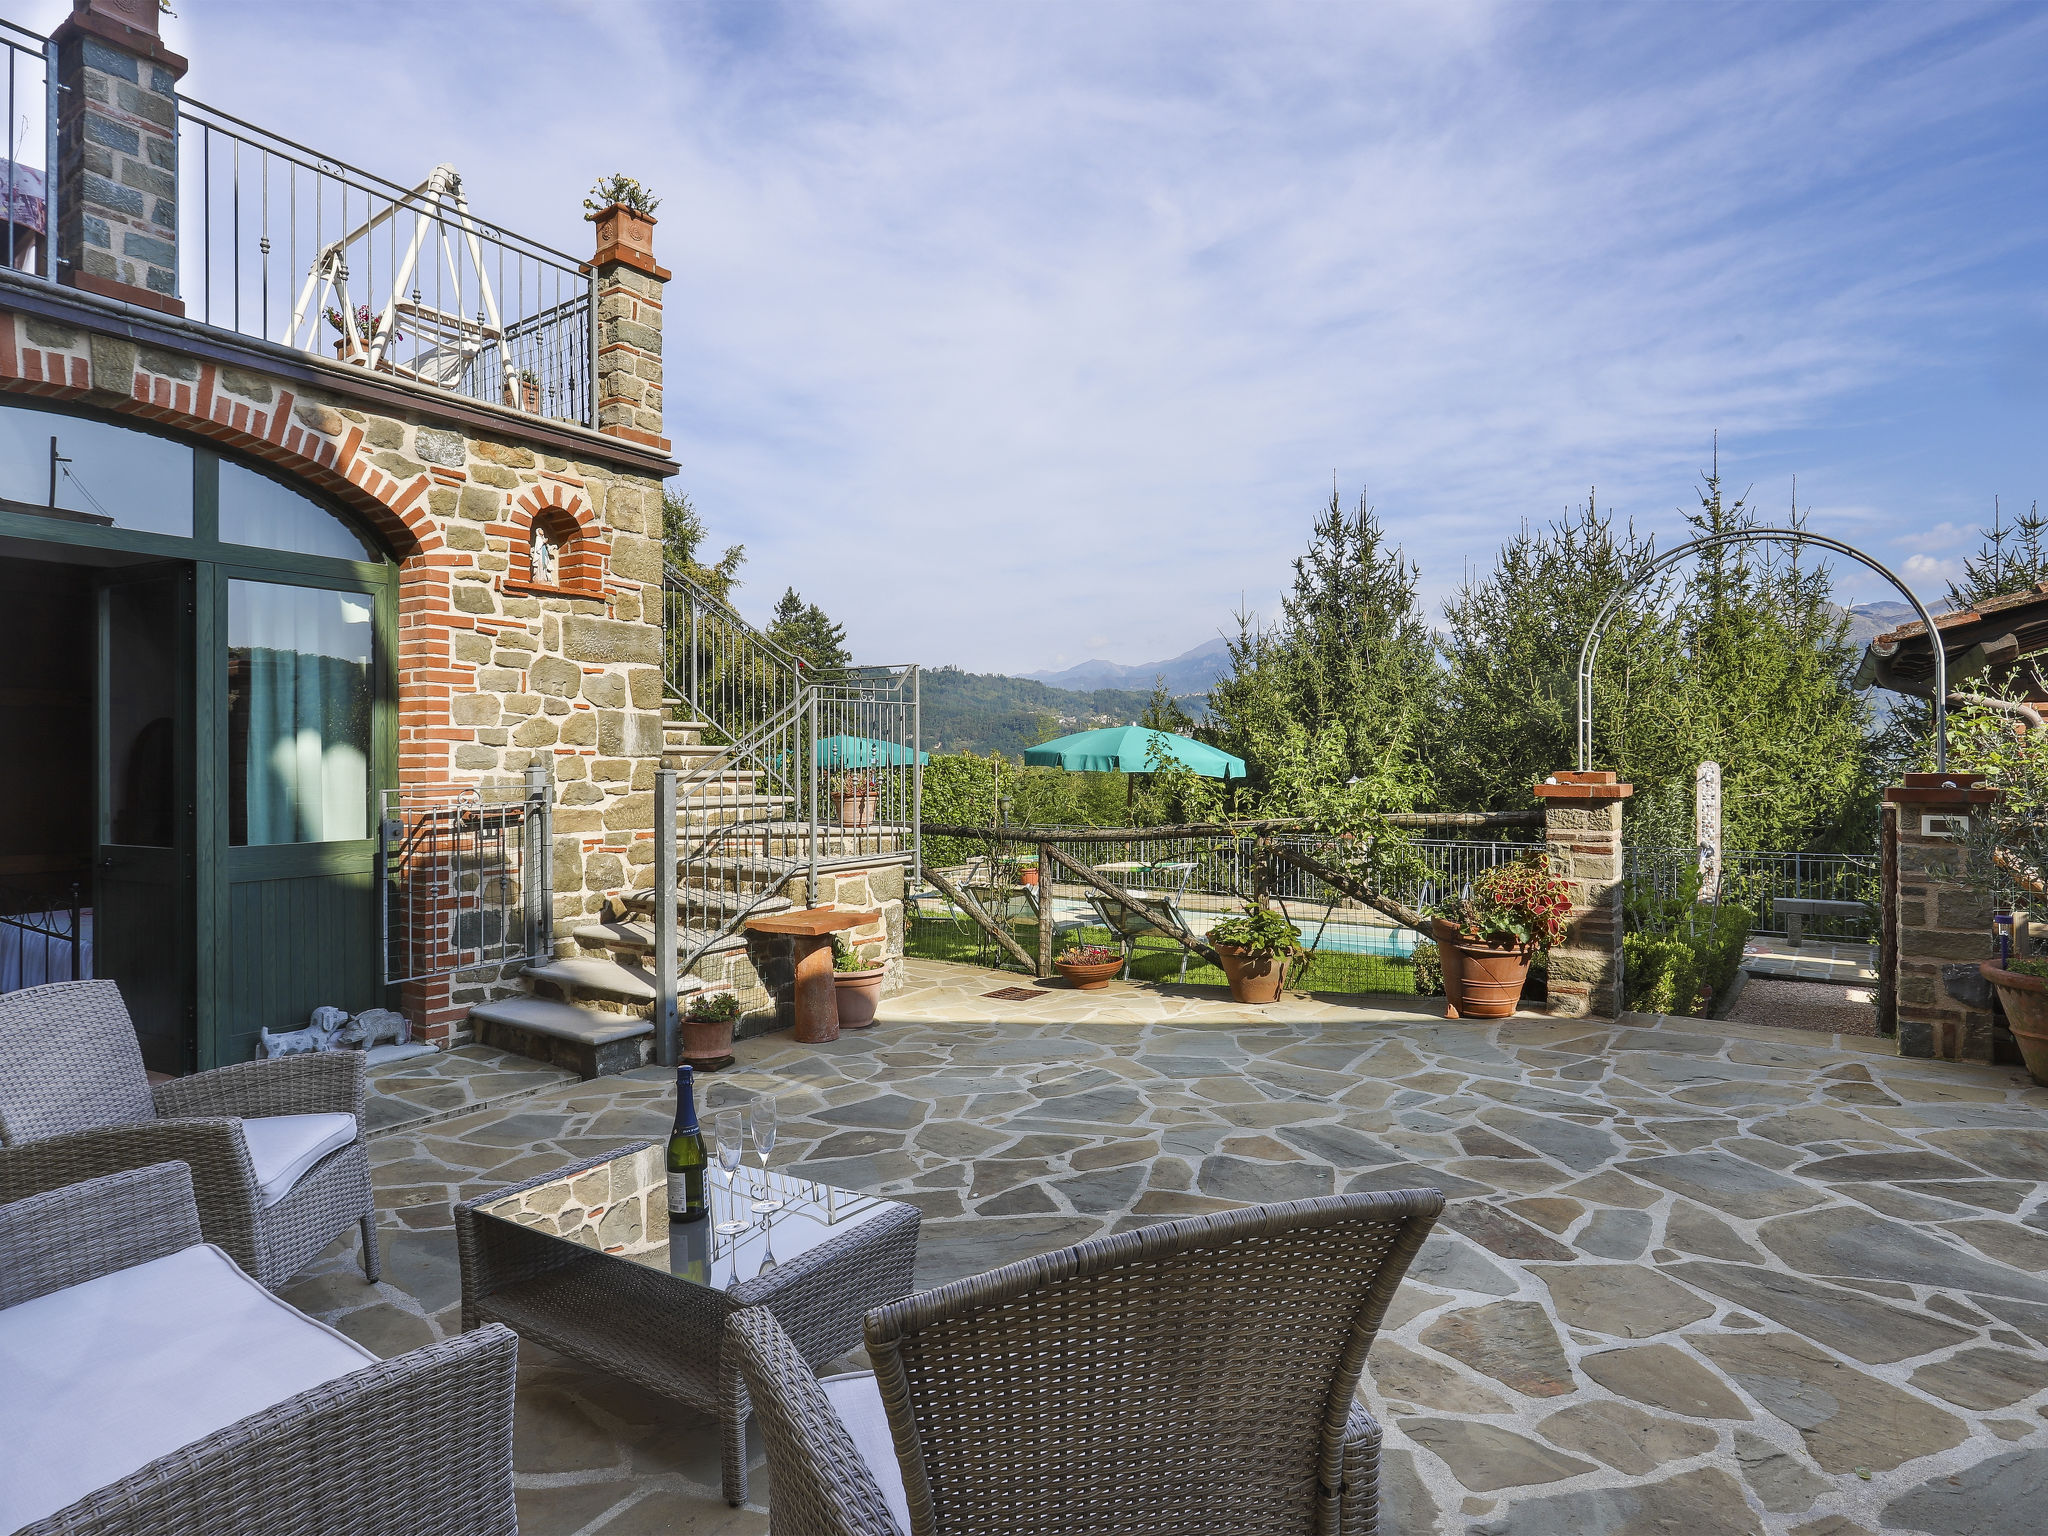 Foto 4 - Apartment mit 2 Schlafzimmern in Bagni di Lucca mit privater pool und terrasse